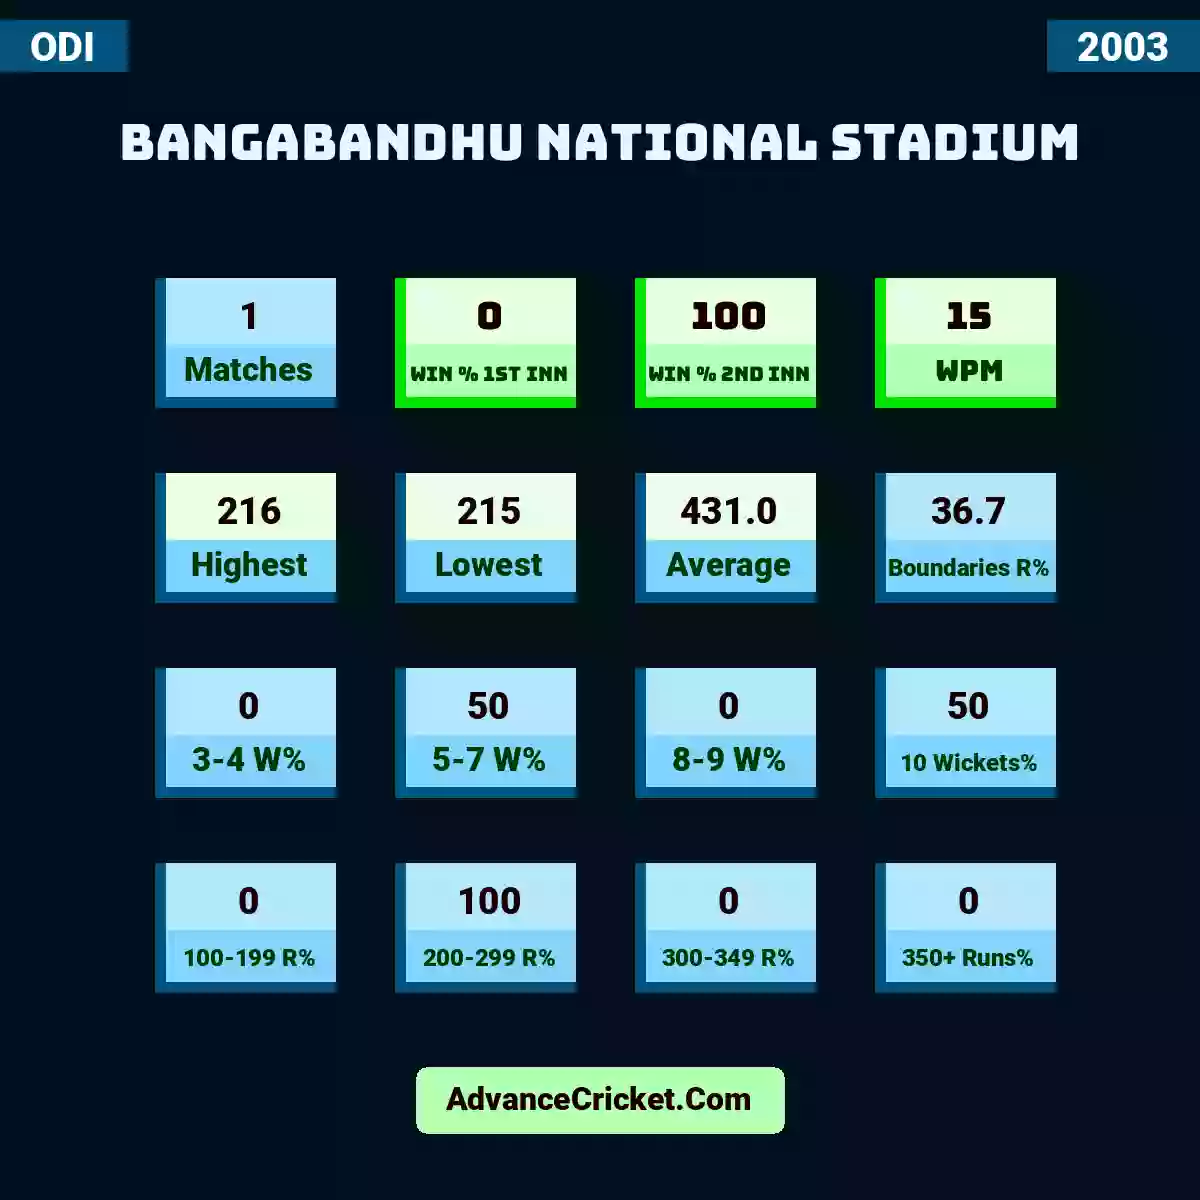 Image showing Bangabandhu National Stadium with Matches: 1, Win % 1st Inn: 0, Win % 2nd Inn: 100, WPM: 15, Highest: 216, Lowest: 215, Average: 431.0, Boundaries R%: 36.7, 3-4 W%: 0, 5-7 W%: 50, 8-9 W%: 0, 10 Wickets%: 50, 100-199 R%: 0, 200-299 R%: 100, 300-349 R%: 0, 350+ Runs%: 0.